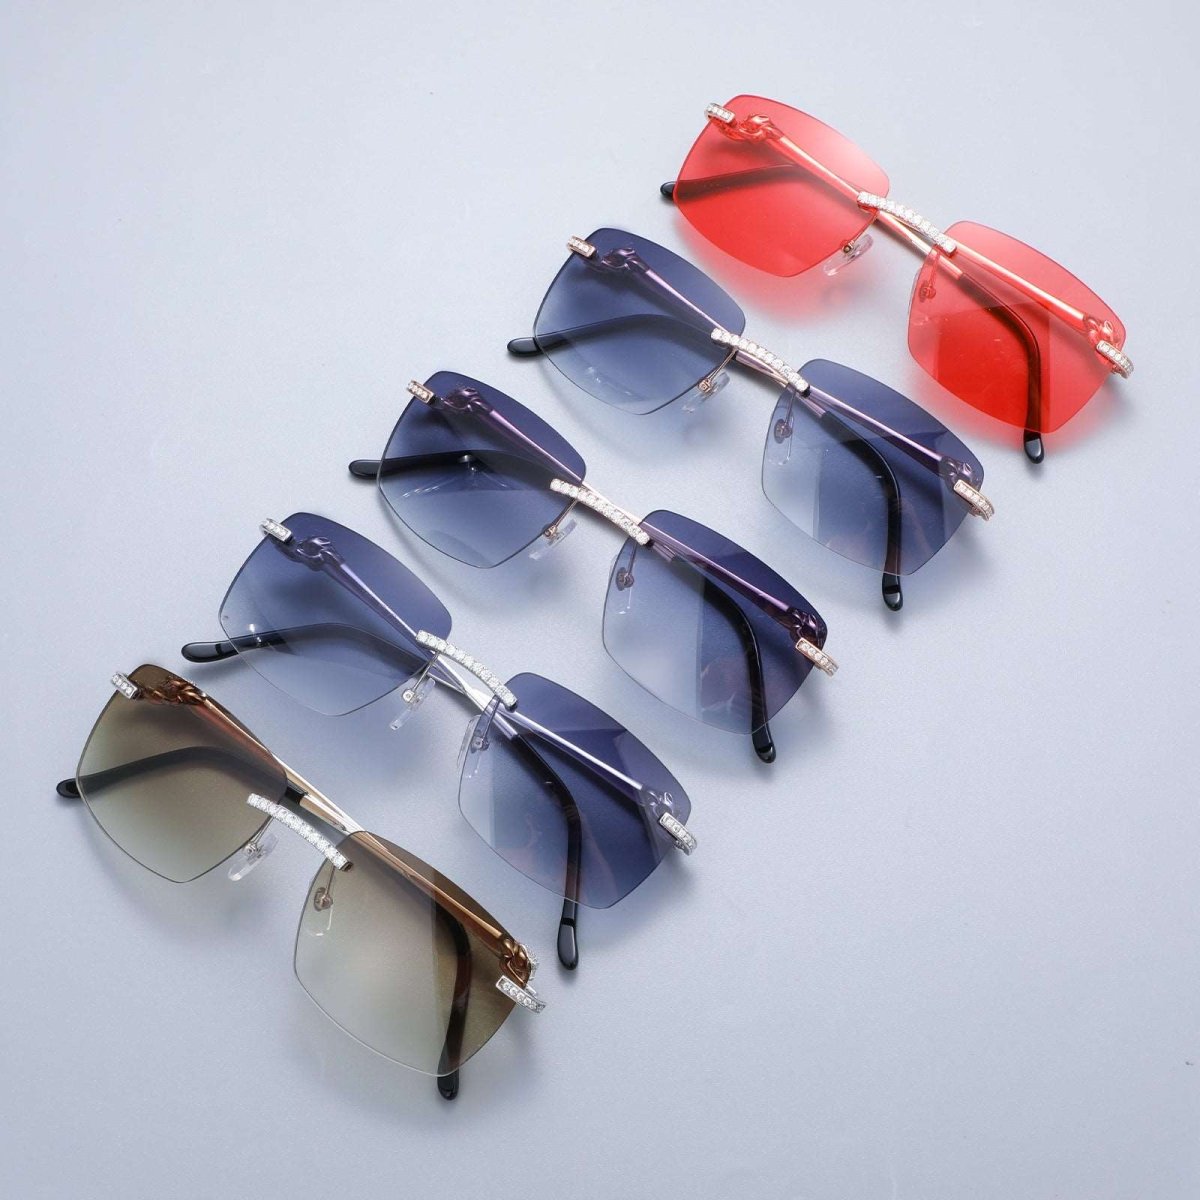 Handmade VVS Moissanite Sunglasses - Uniquely You Online - Sunglasses